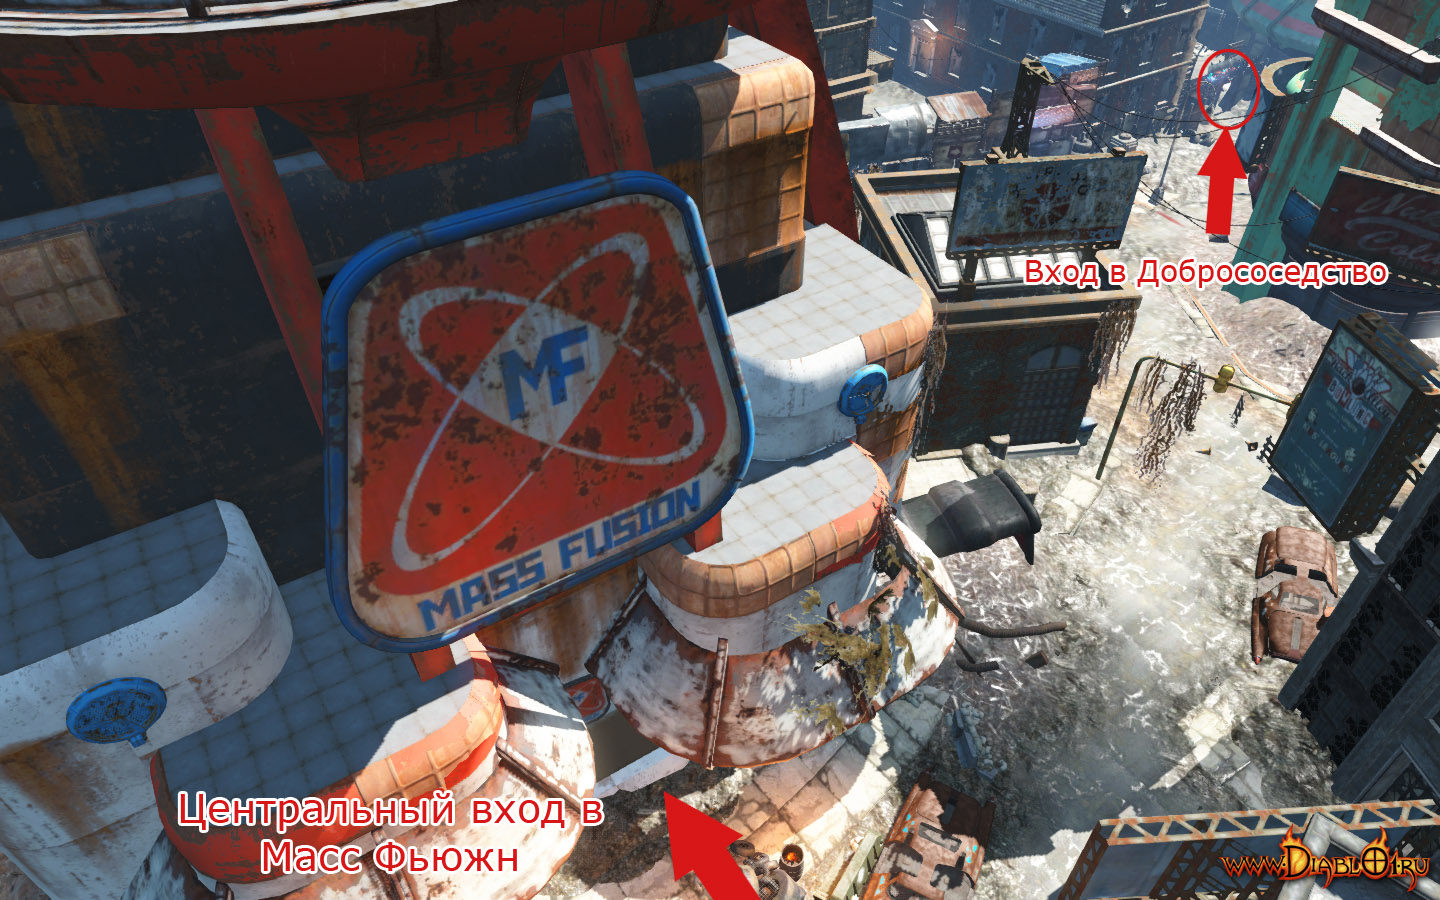 Fallout 4 где находится добрососедство фото 16